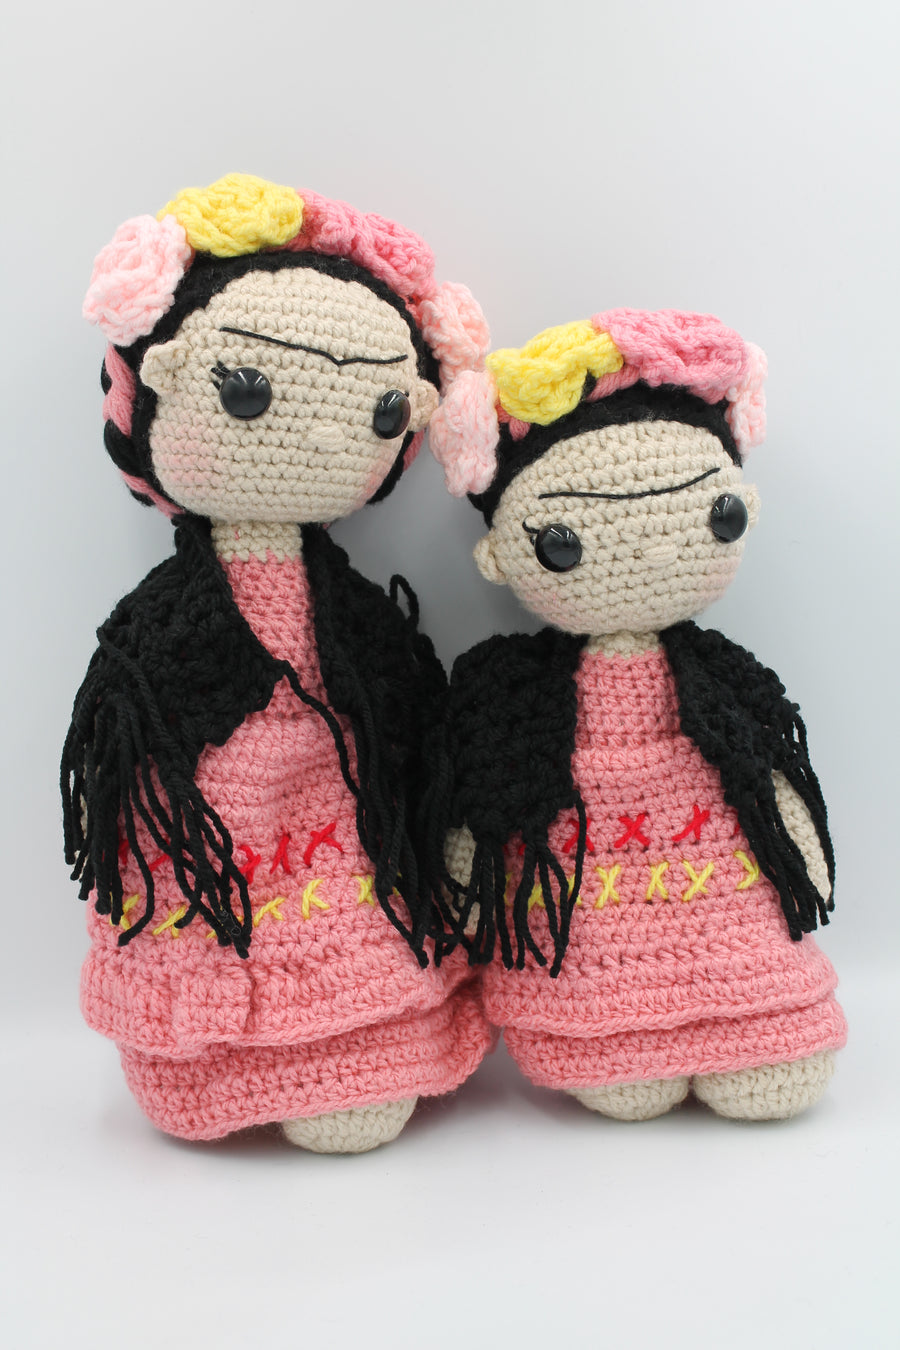 Crochet Frida Khalo Doll - Pink Dress